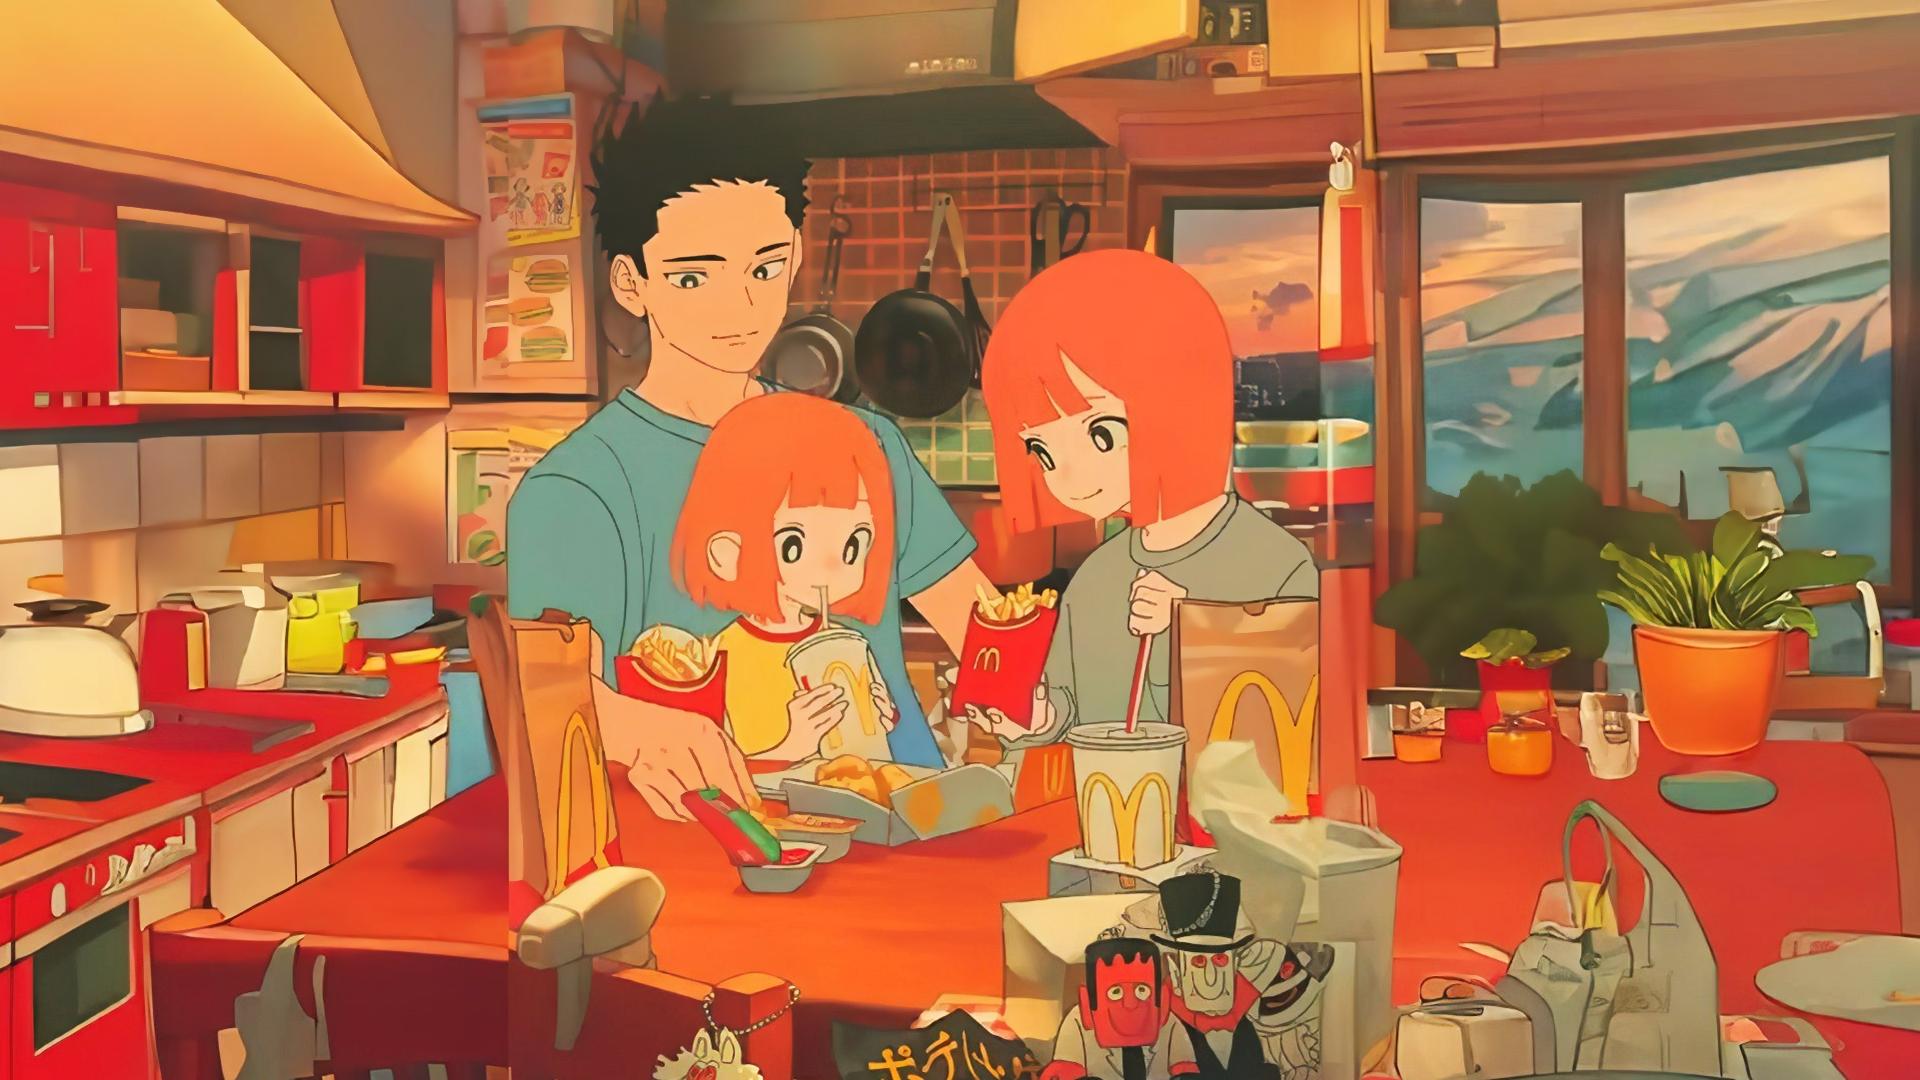 McDonalds Japan shares anime style ads by Urachan - Game News 24